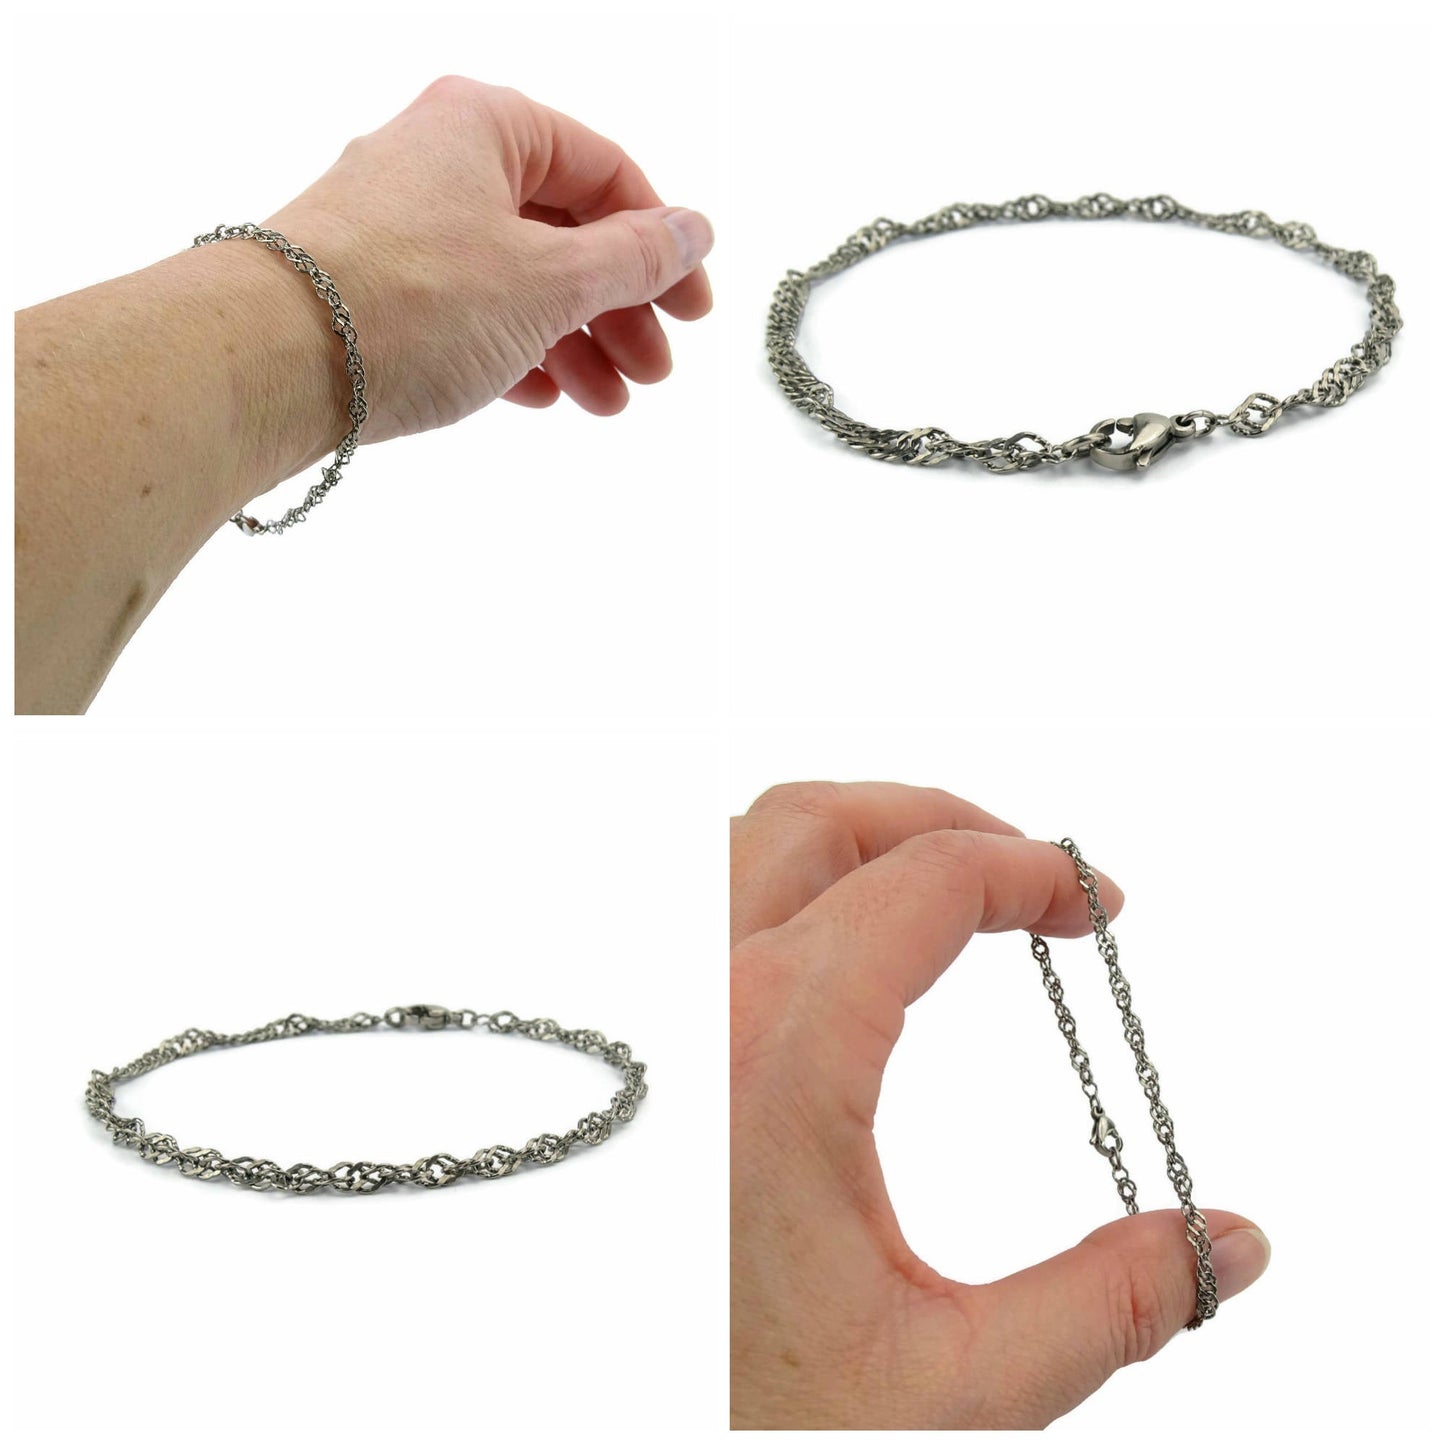 Singapore Style Titanium Bracelet, Pure Titanium Chain Bracelet for Sensitive Skin, Singapore Curb Chain Titanium Bracelet or Anklet